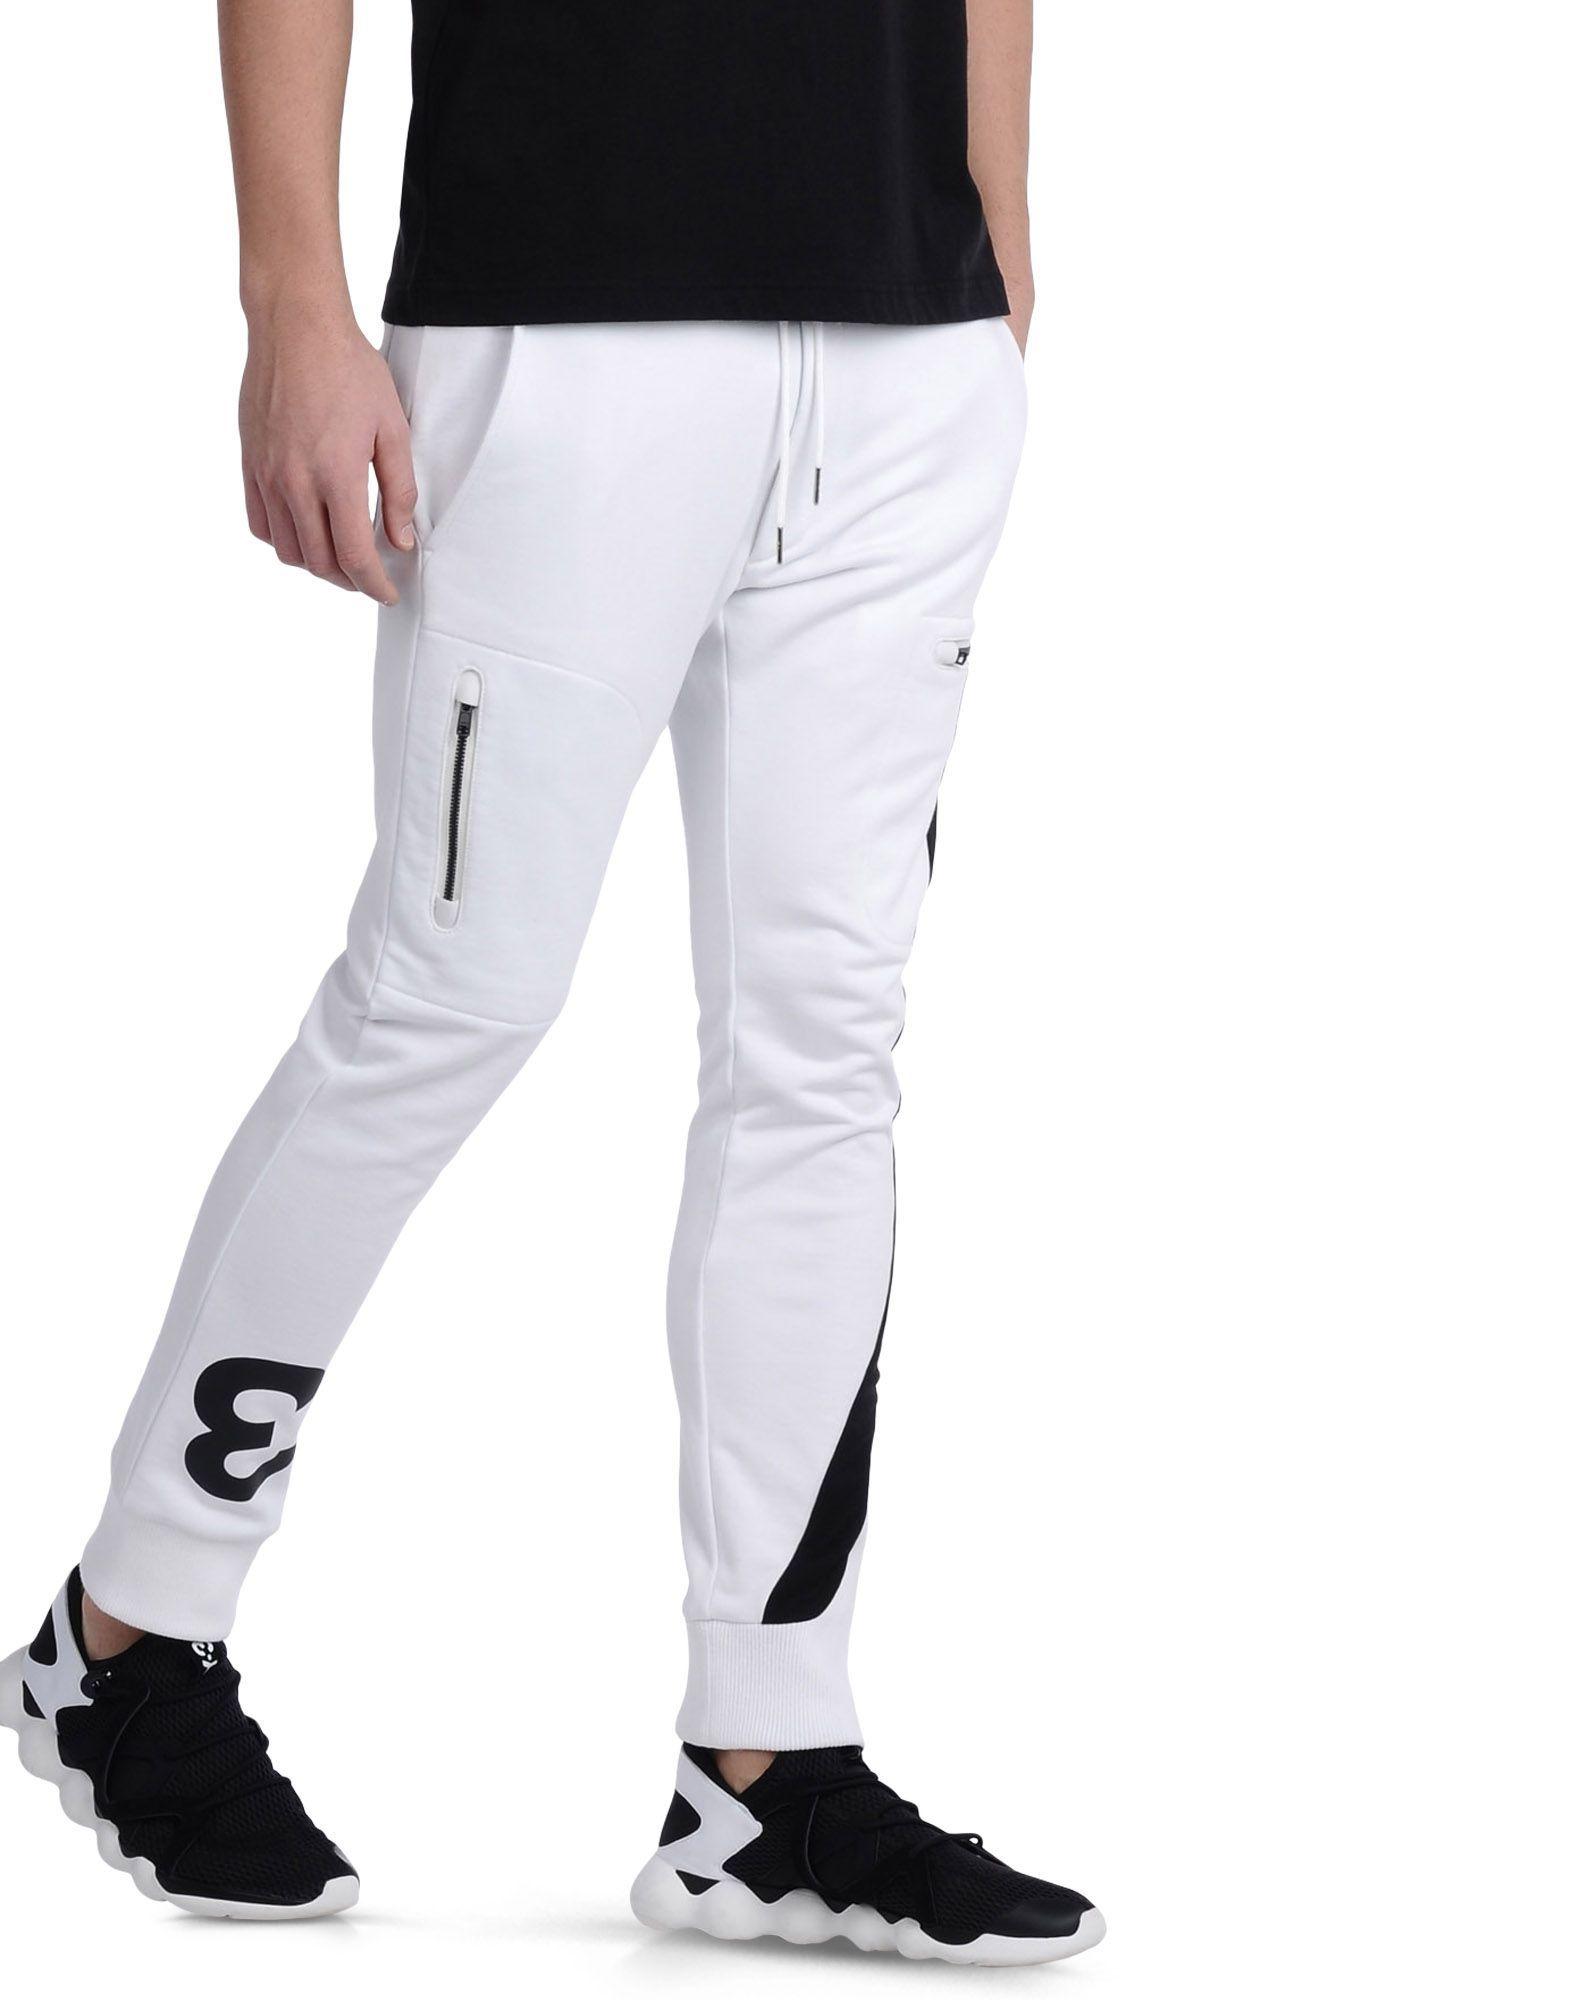 Pants Logo - Y 3 LOGO PANT Sweatpants. Adidas Y 3 Official Site